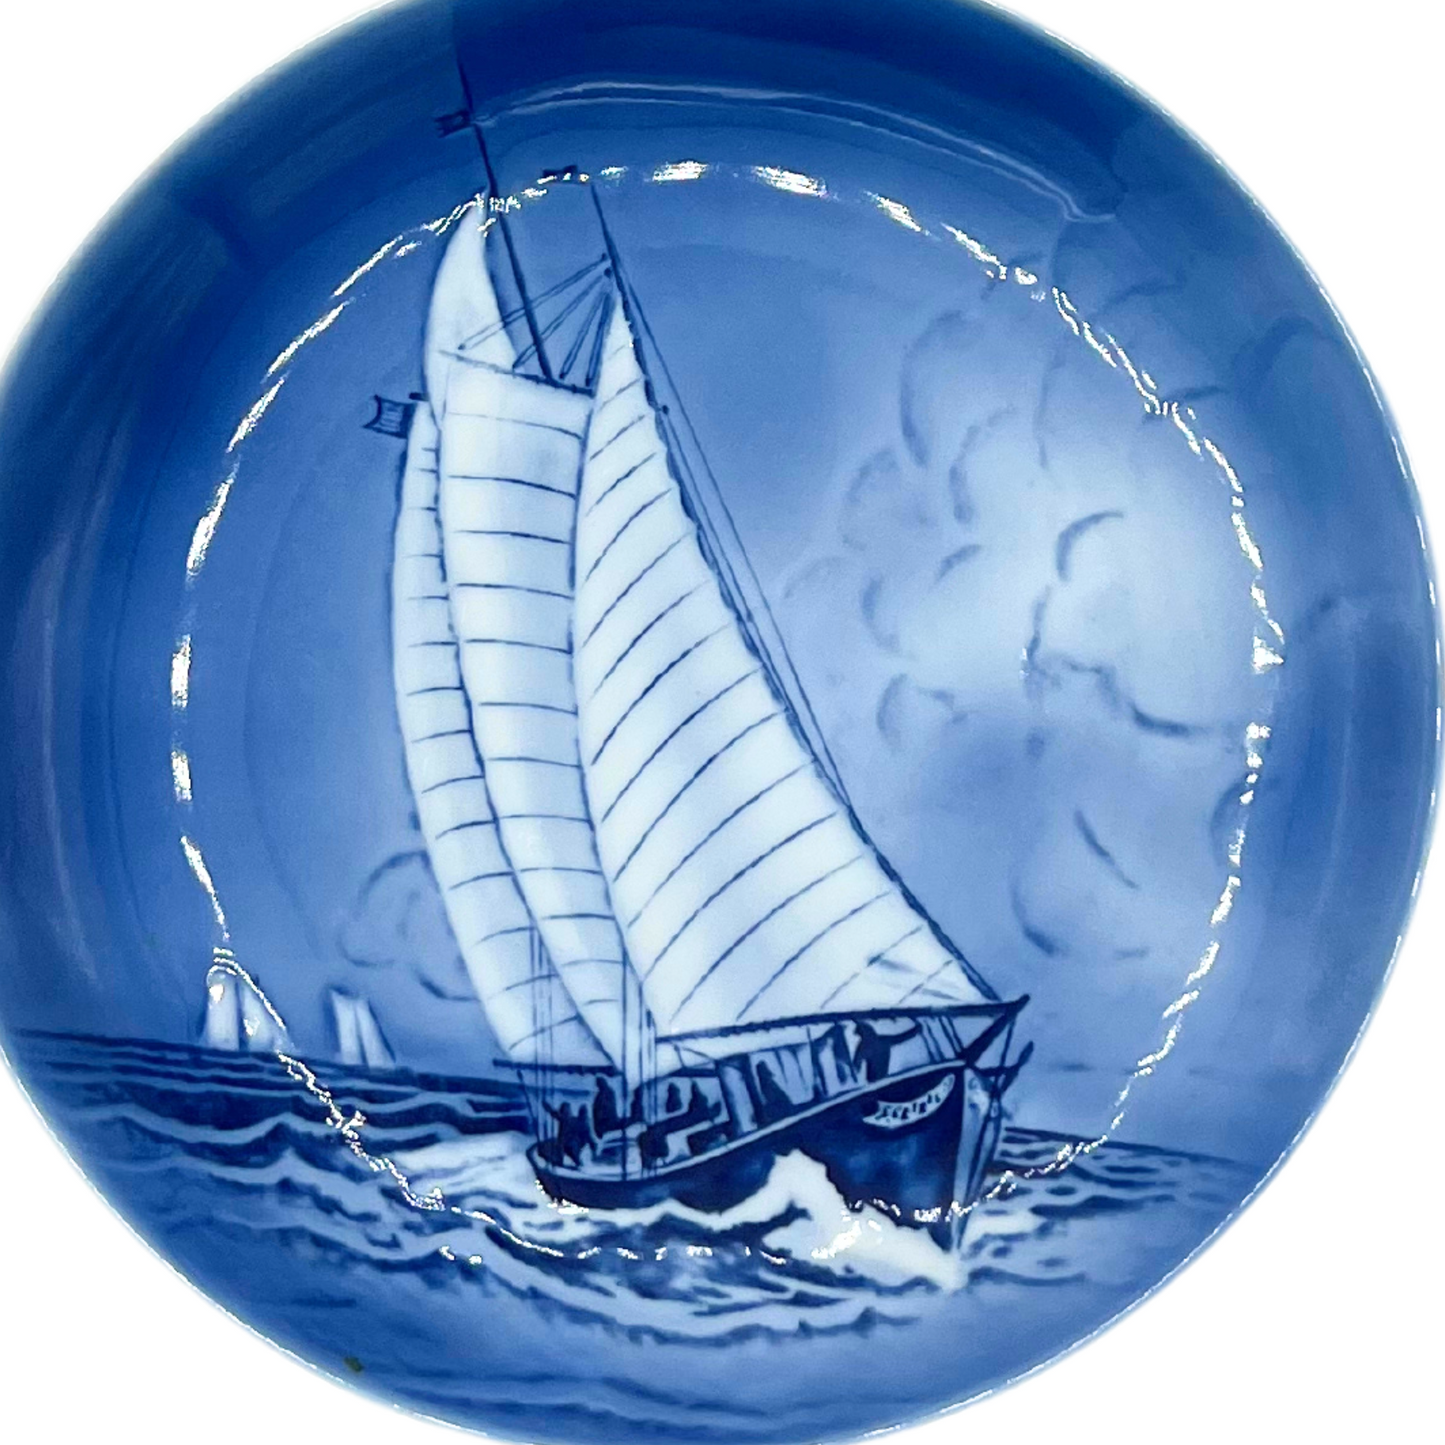 1983 New York Yacht Club commemorative plate